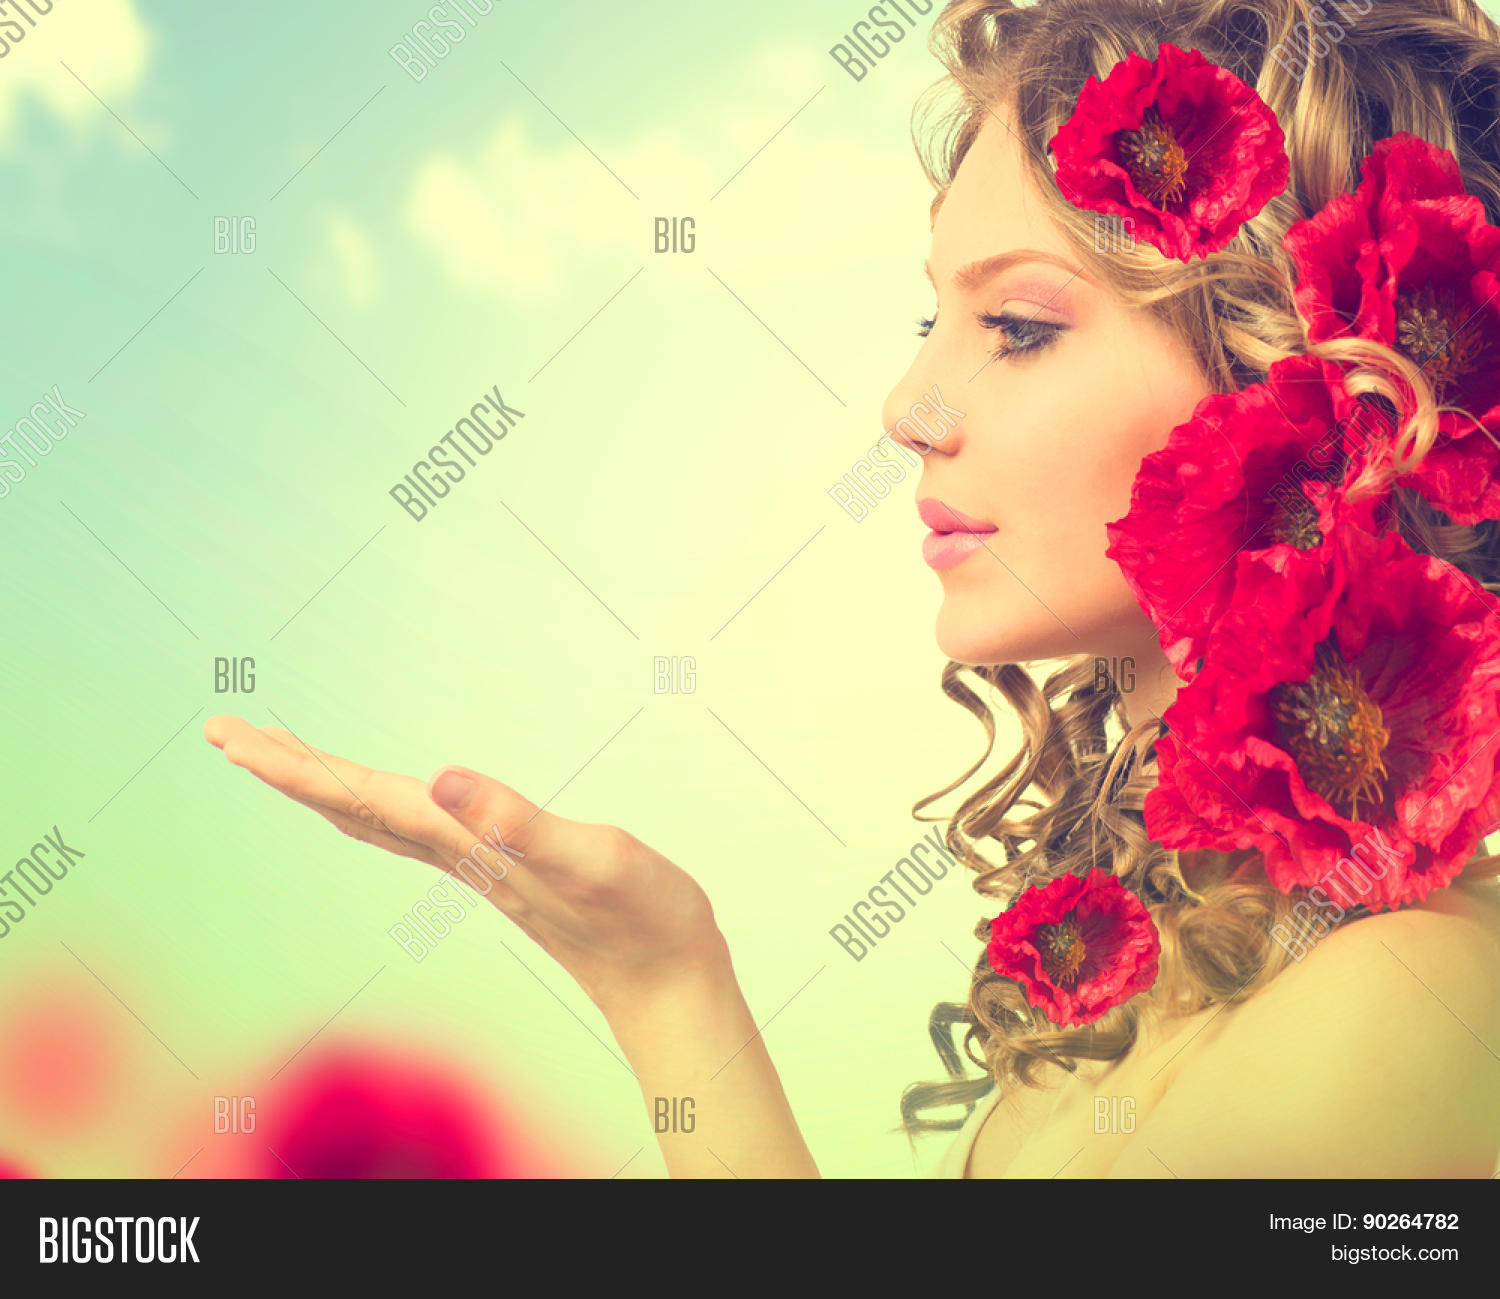 Beauty Girl Red Poppy Flowers Image & Photo | Bigstock